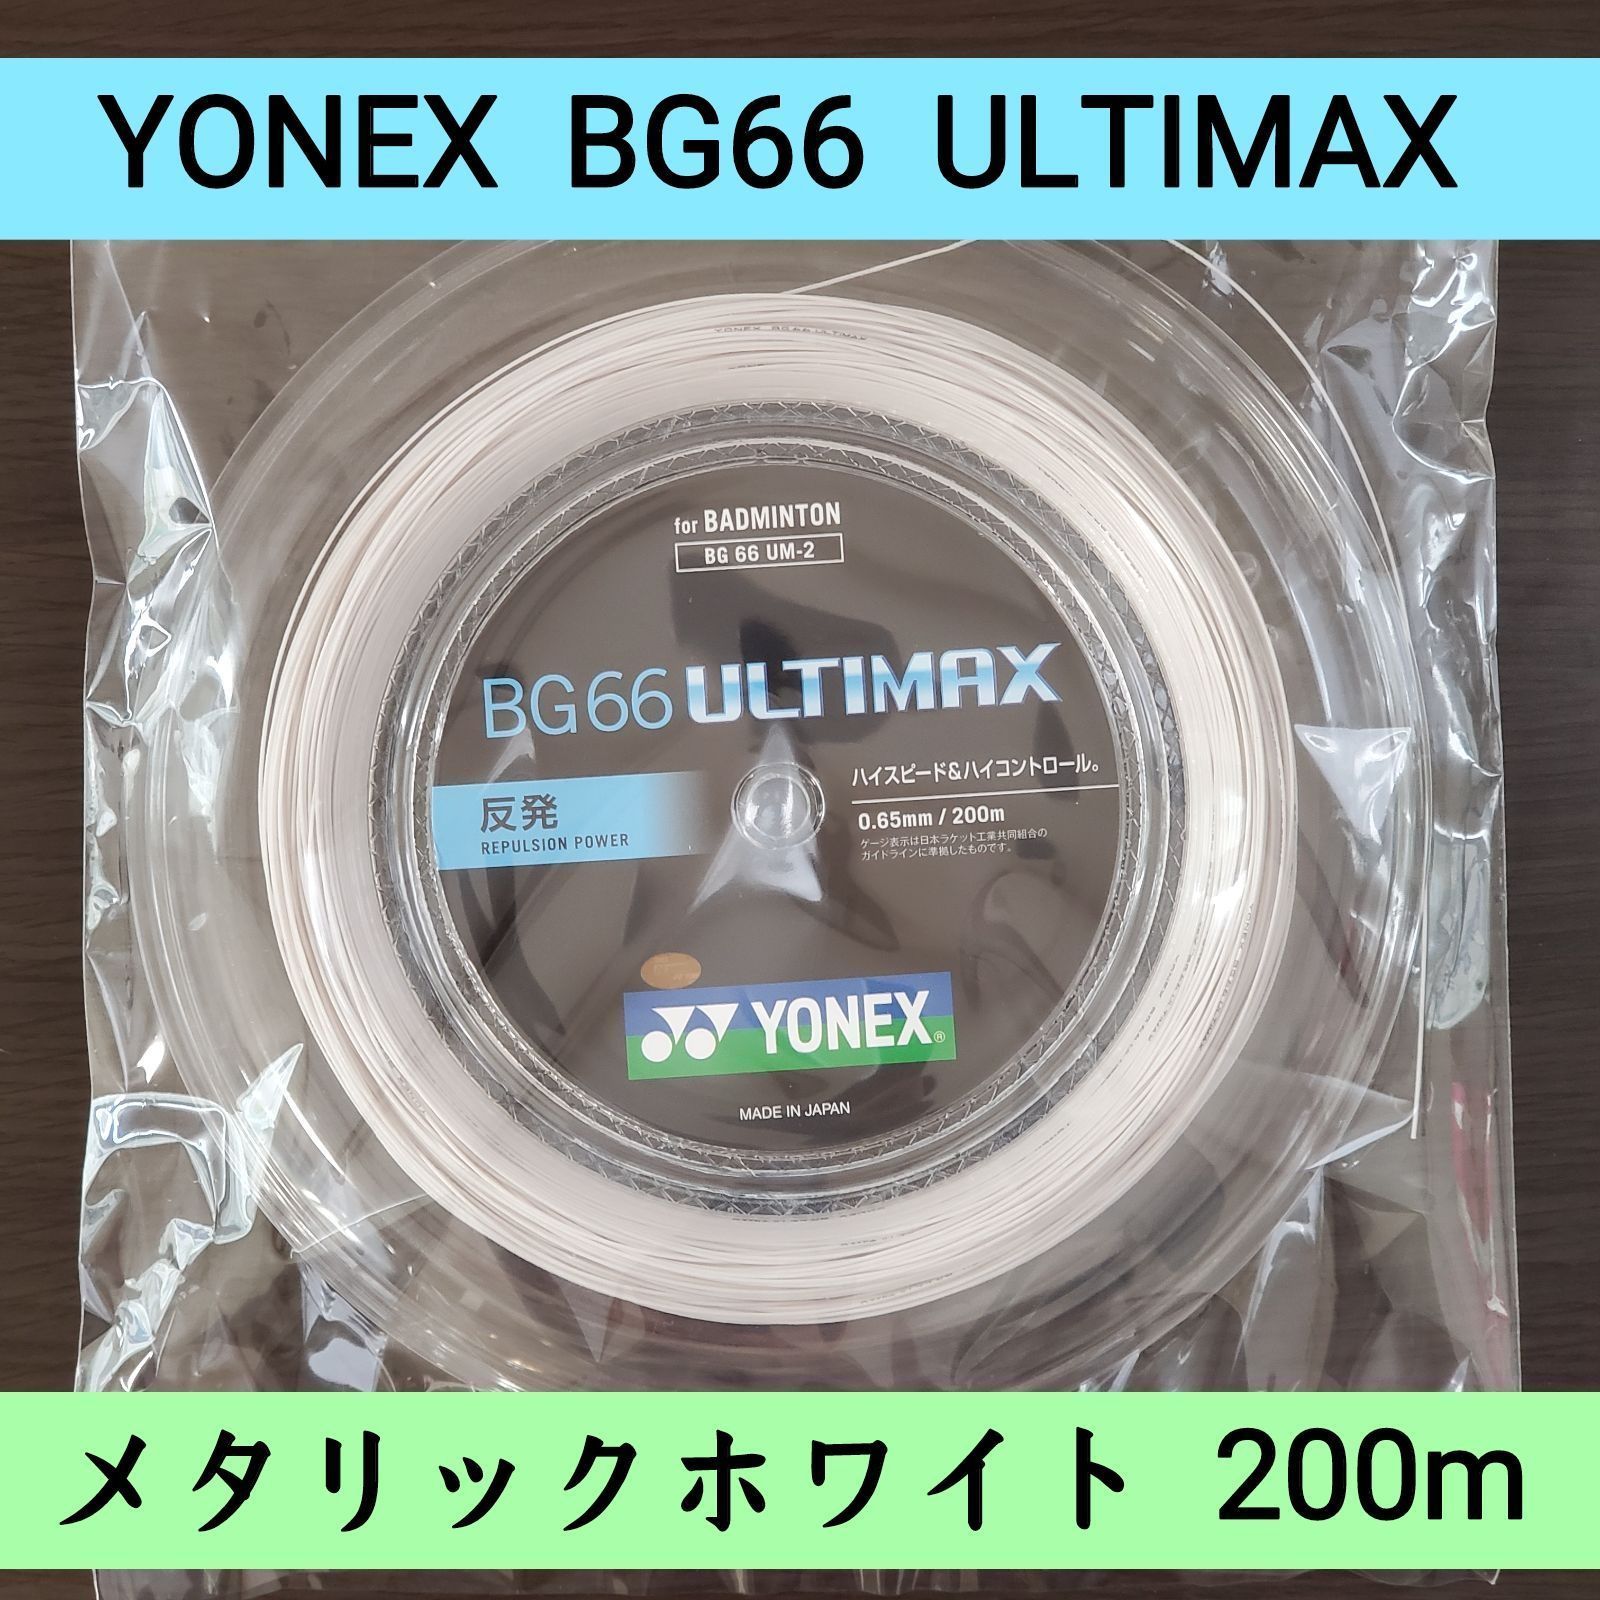 YONEX バドミントンストリング BG66 ULTIMAX 200m - ガット